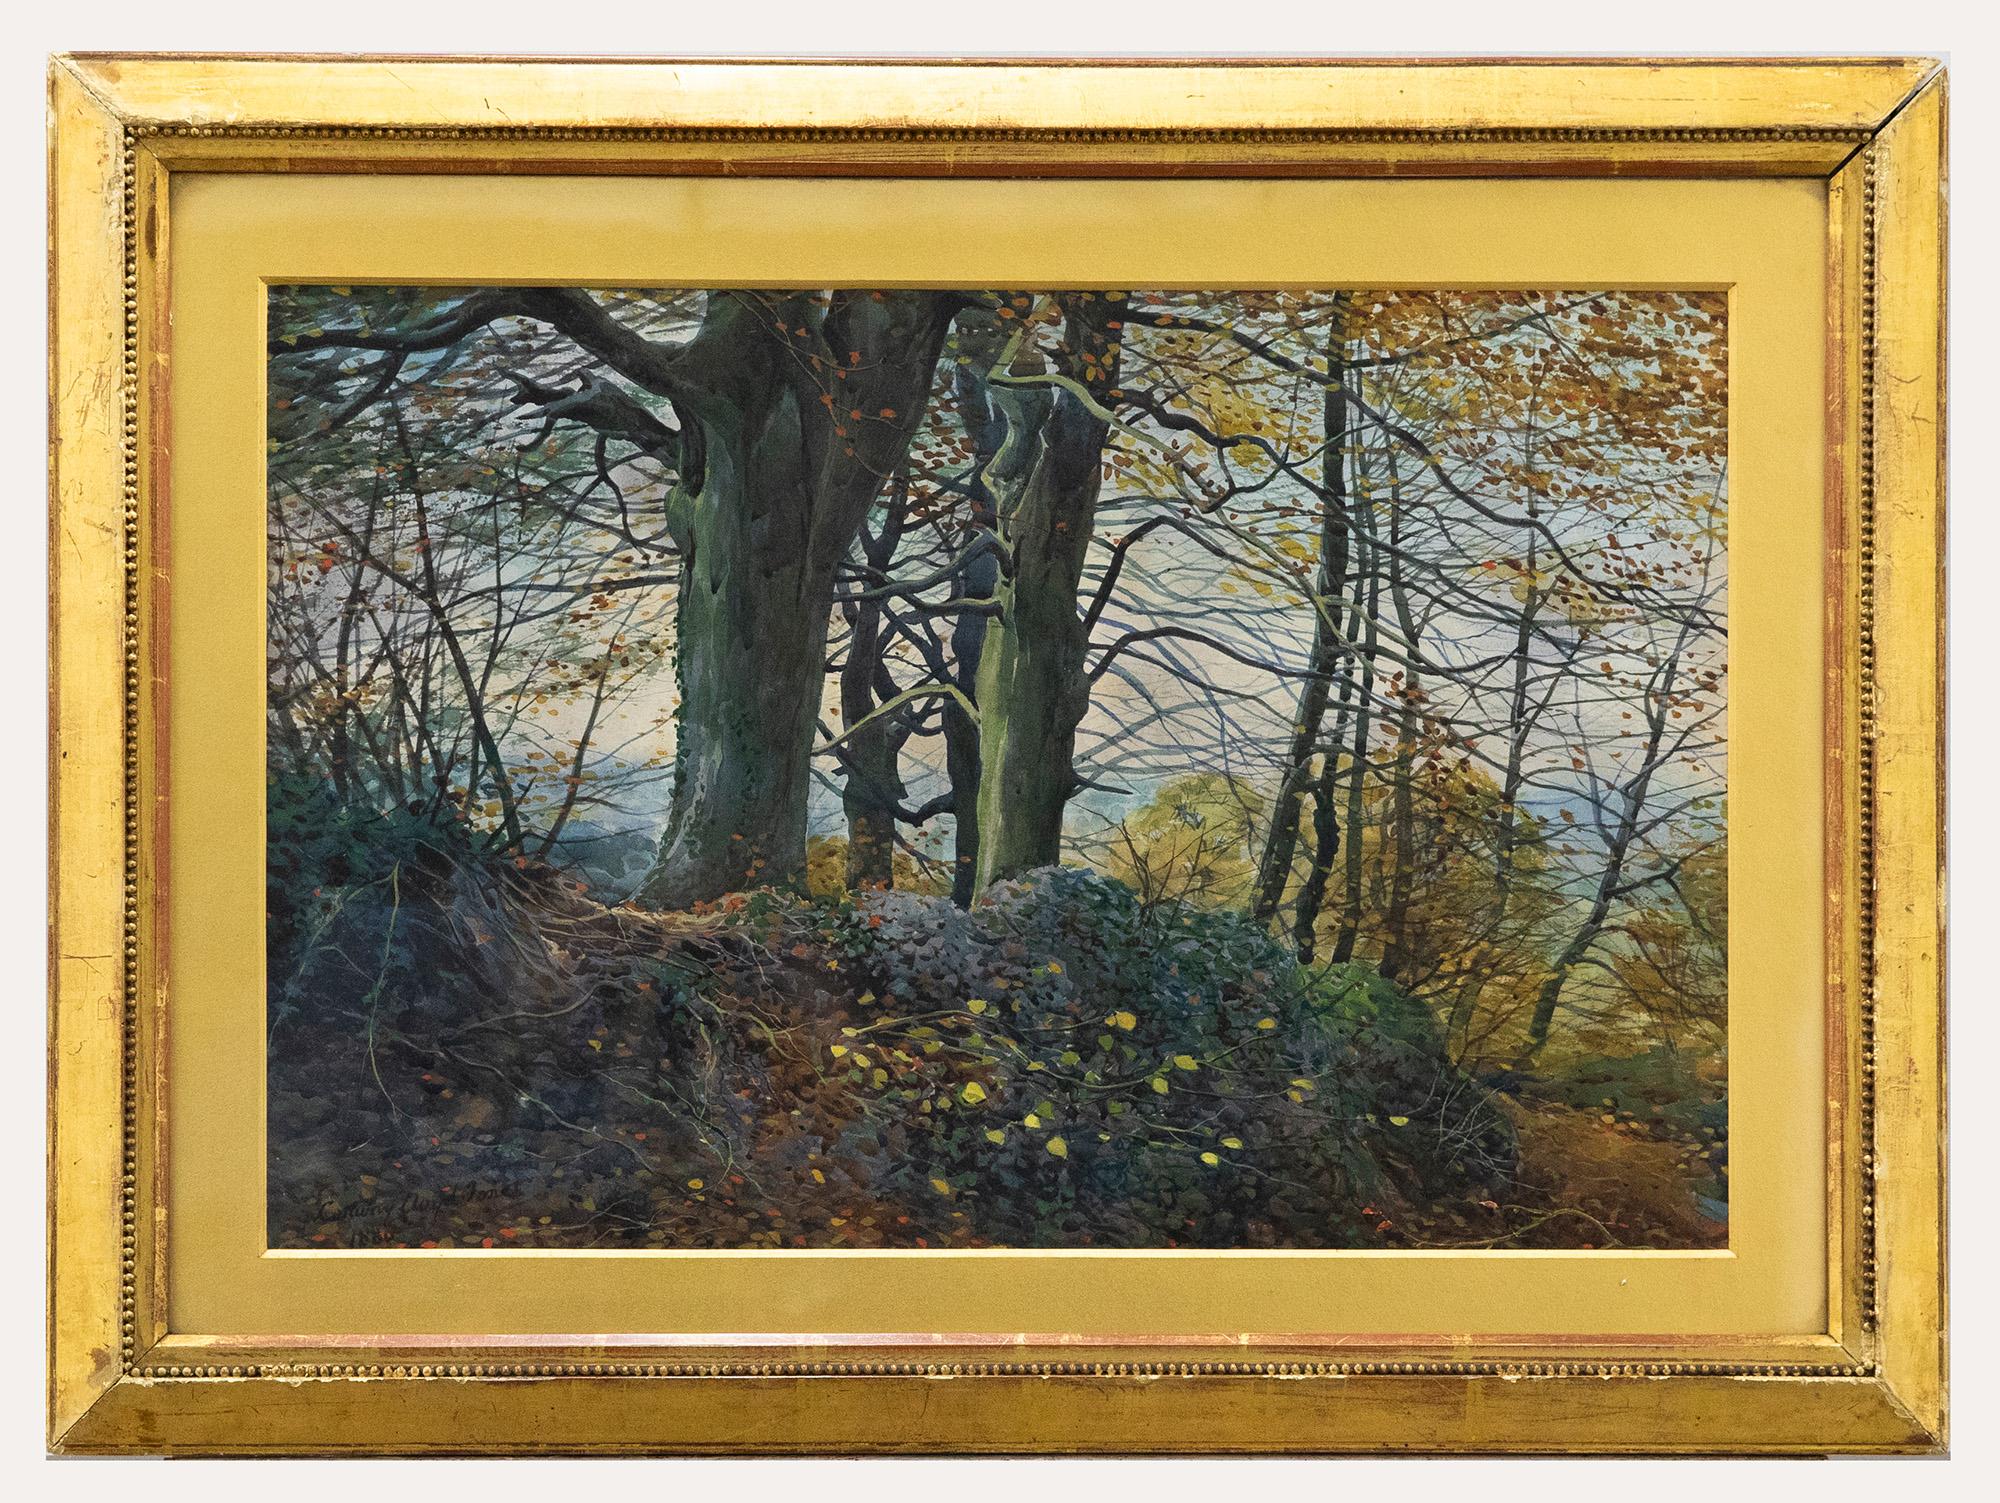 Unknown Landscape Art – Conway Lloyd Jones (1846-1897) - Gerahmtes Aquarell des späten 19. Jahrhunderts, Beeches